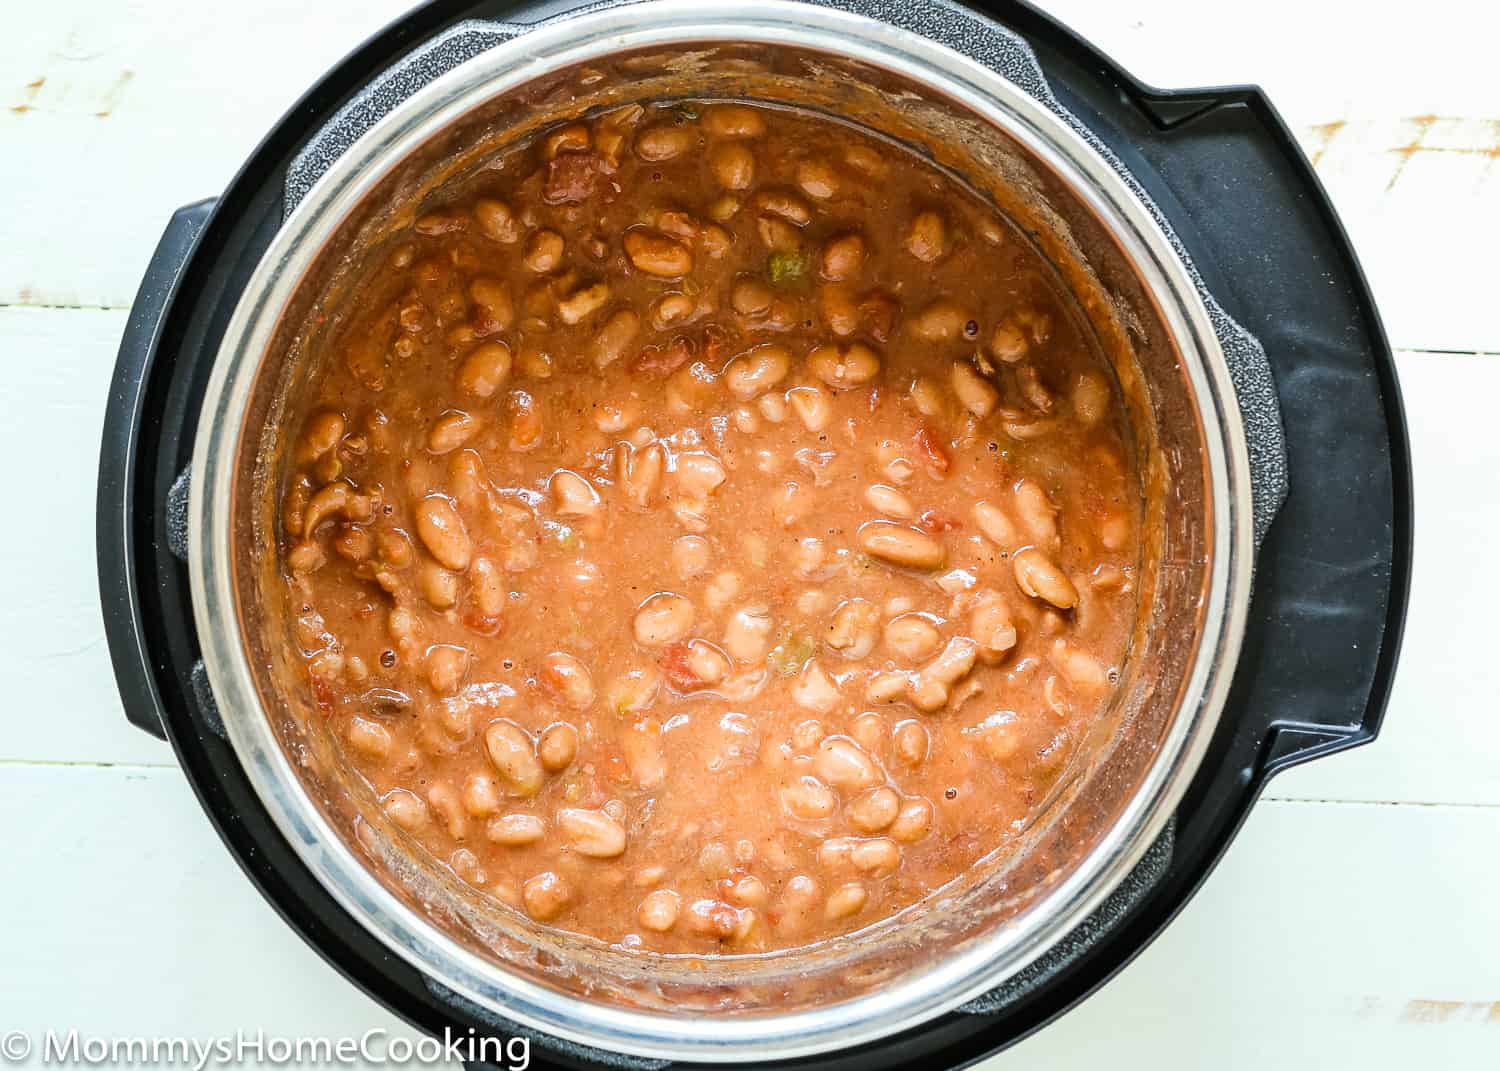 cooked drunken beans in a pot.